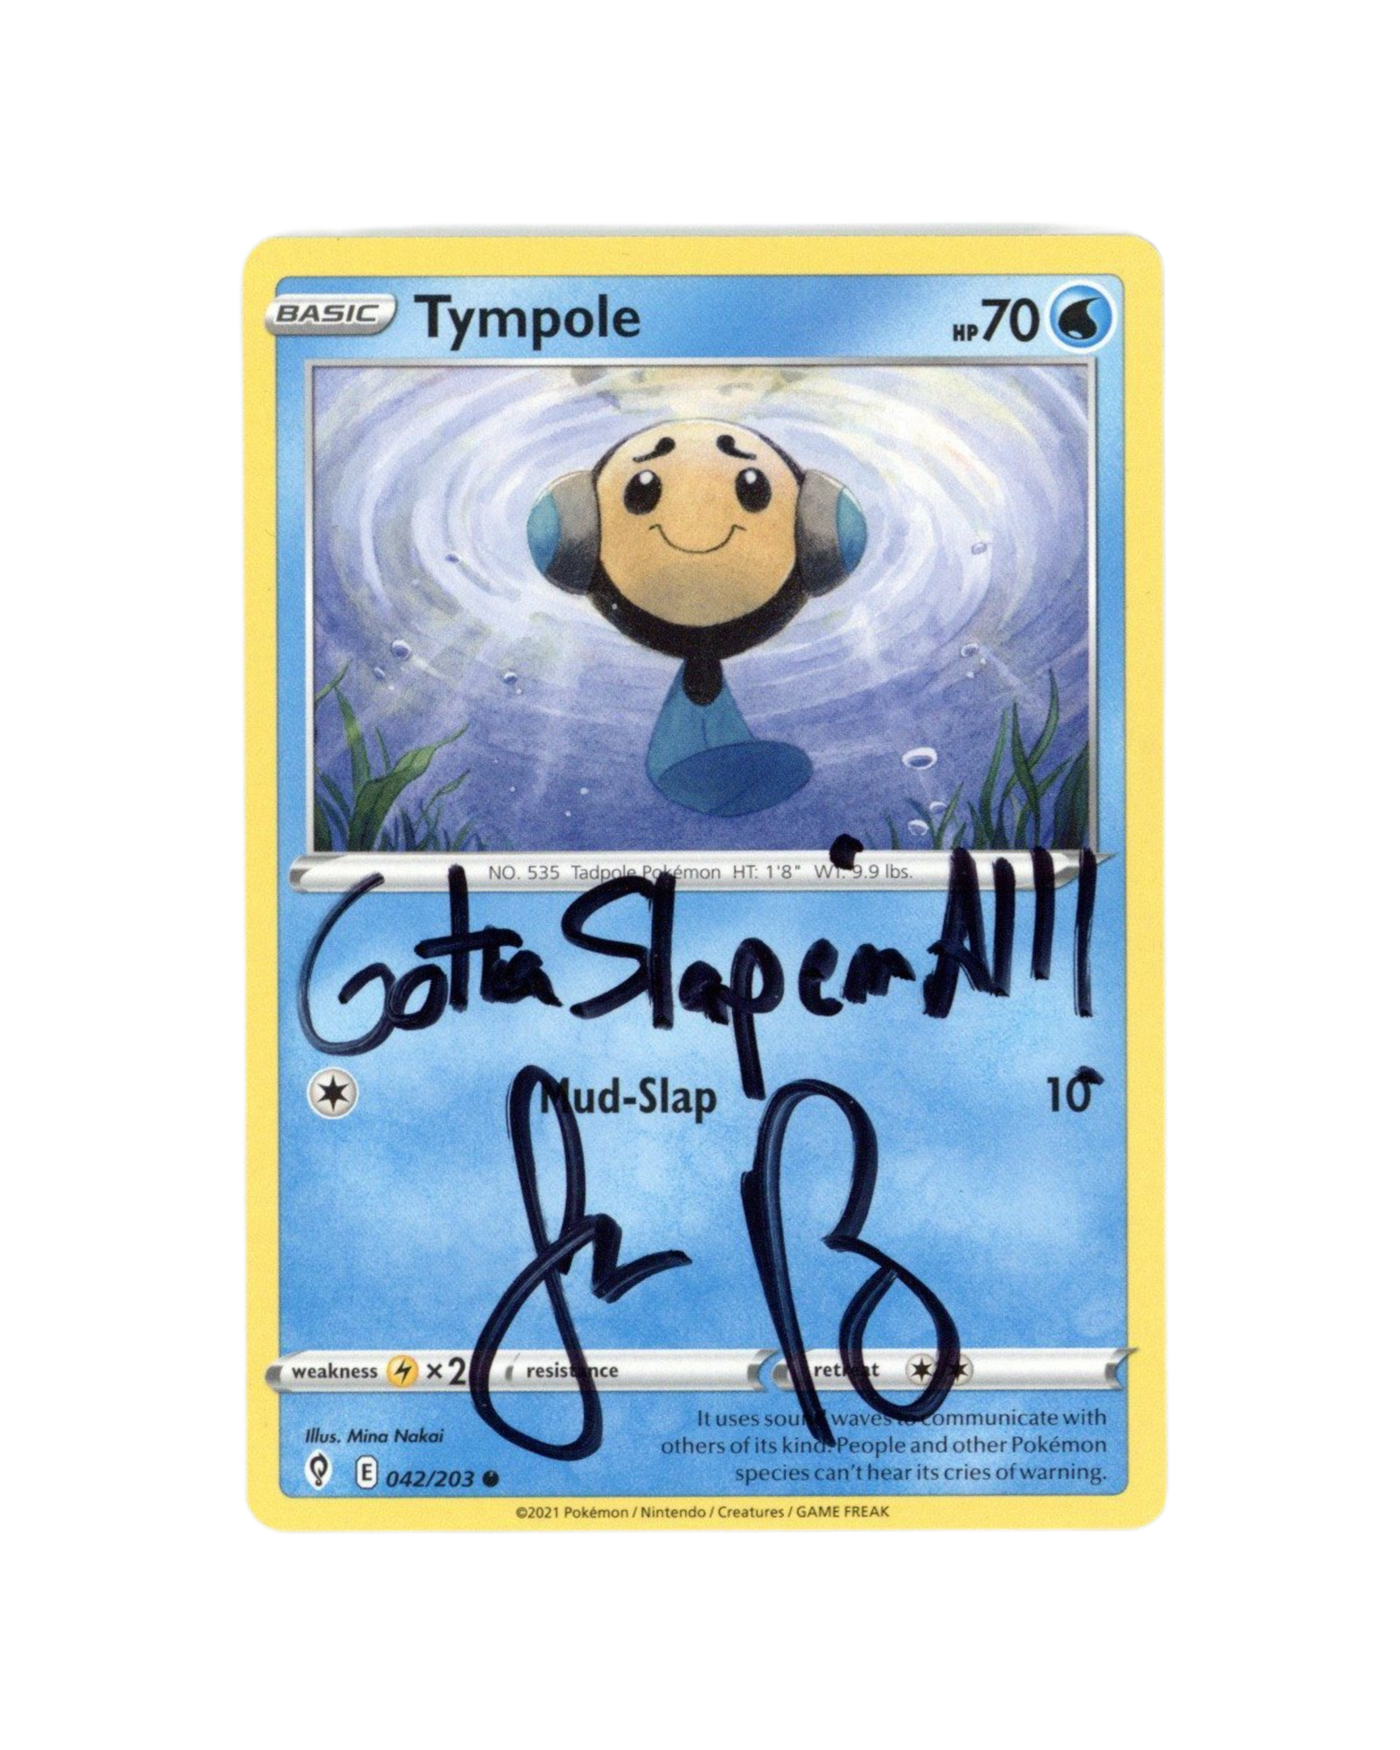 Jason Paige Signed Pokemon Tympole Trading Card - Autographed Zobie COA